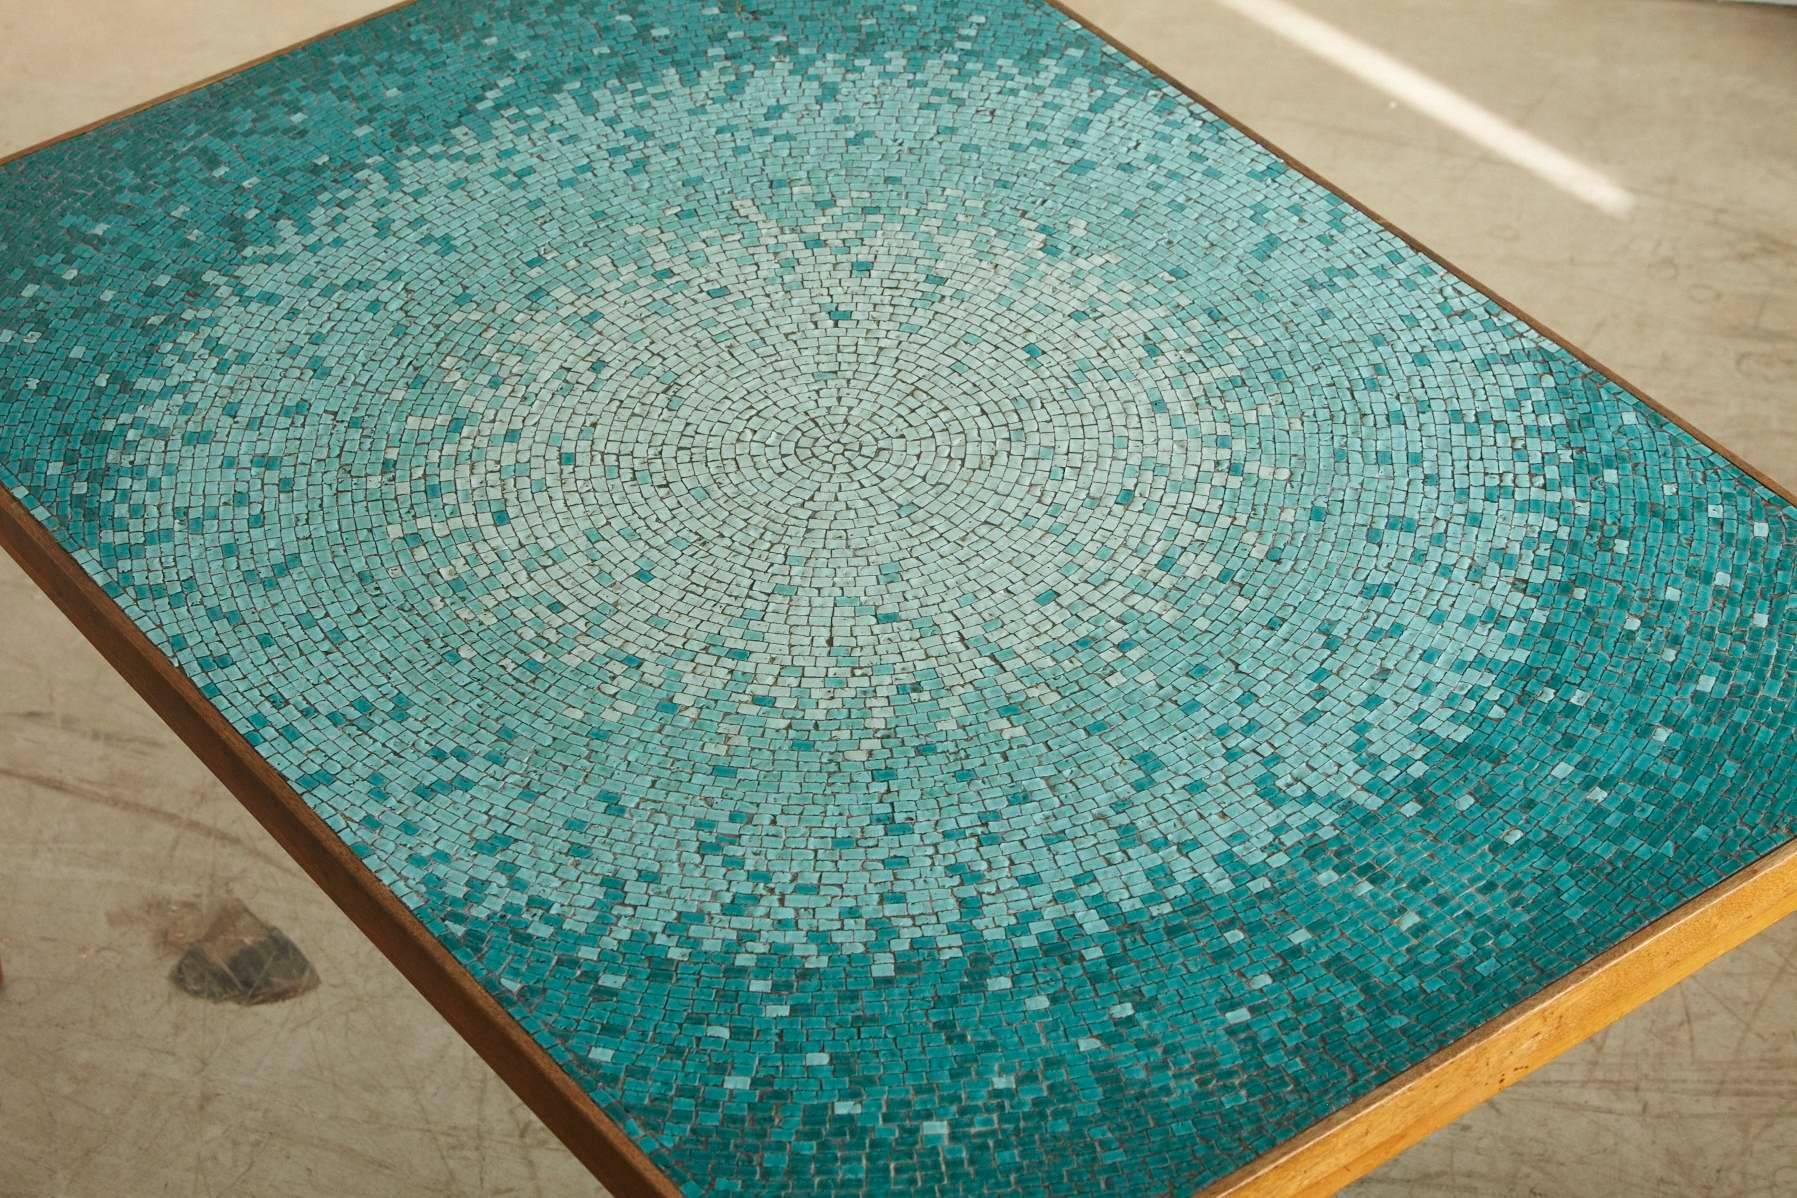 Aquamarine Mosaic Tile Table Attributed to Gordon Martz, Marshall Studio 1